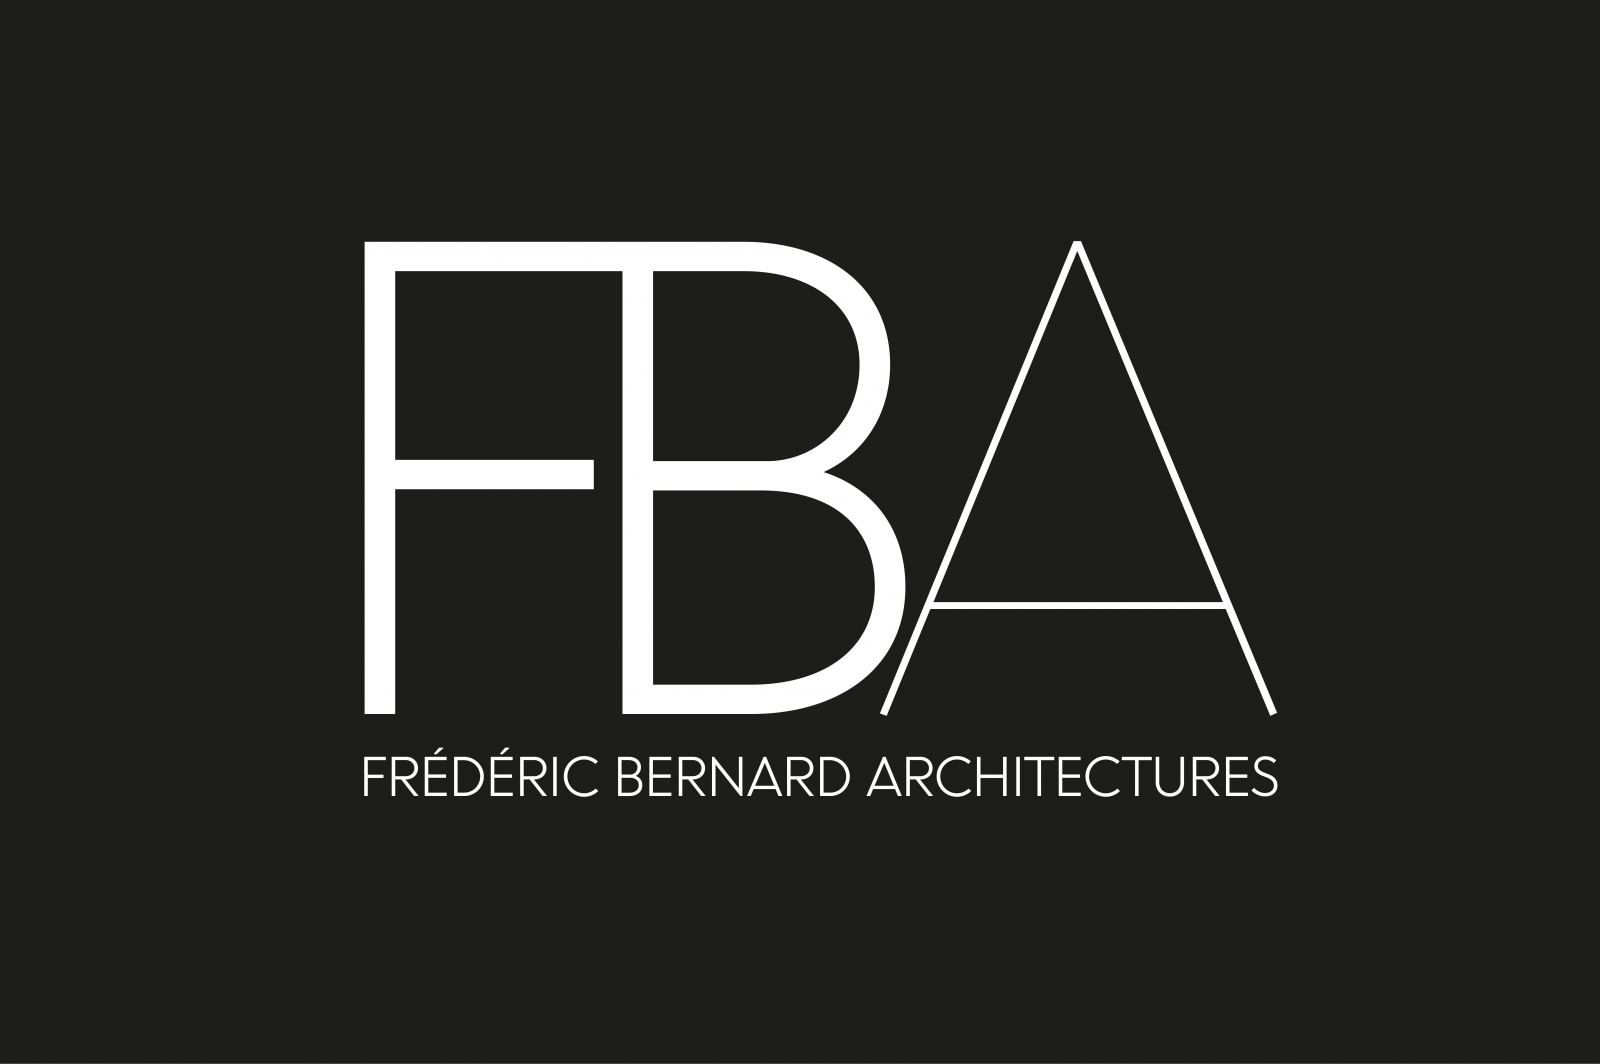 Frédéric Bernard Architectures